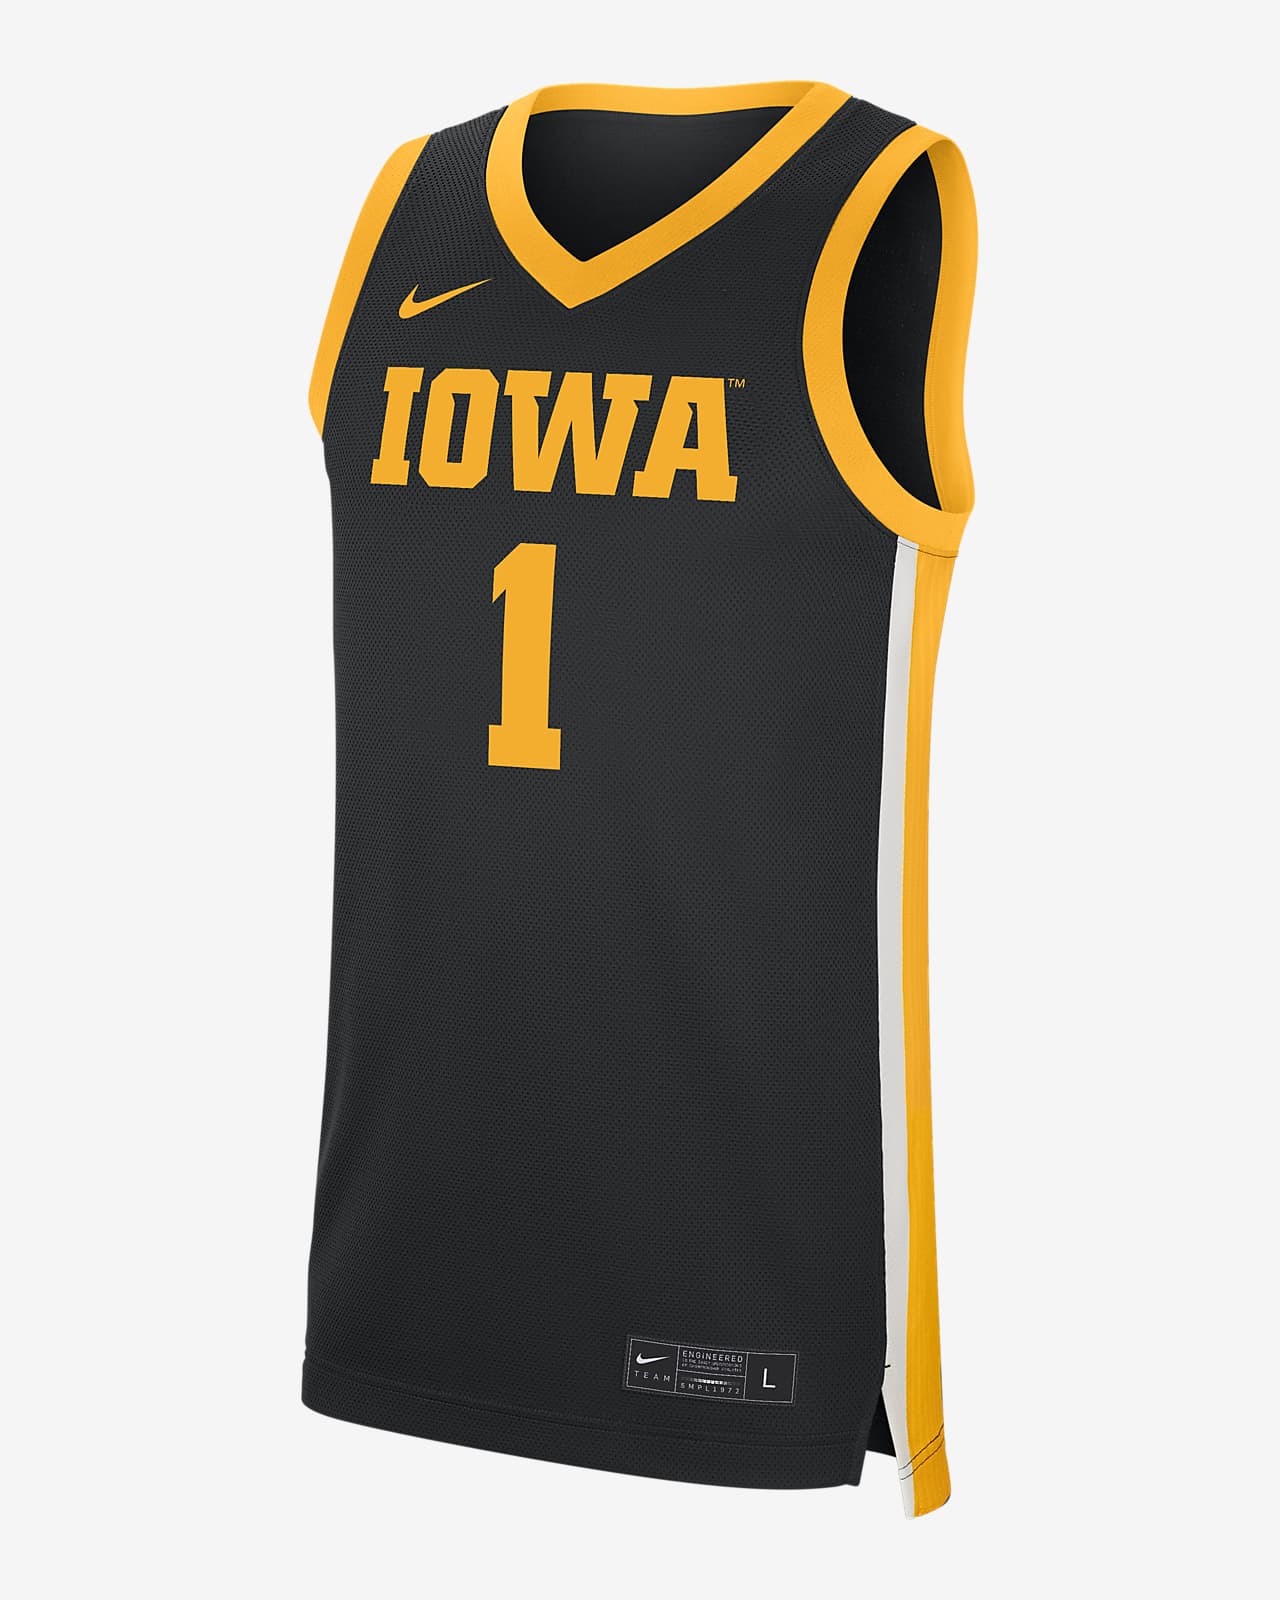 pris tage ned pengeoverførsel Nike College (Iowa) Men's Basketball Jersey. Nike.com